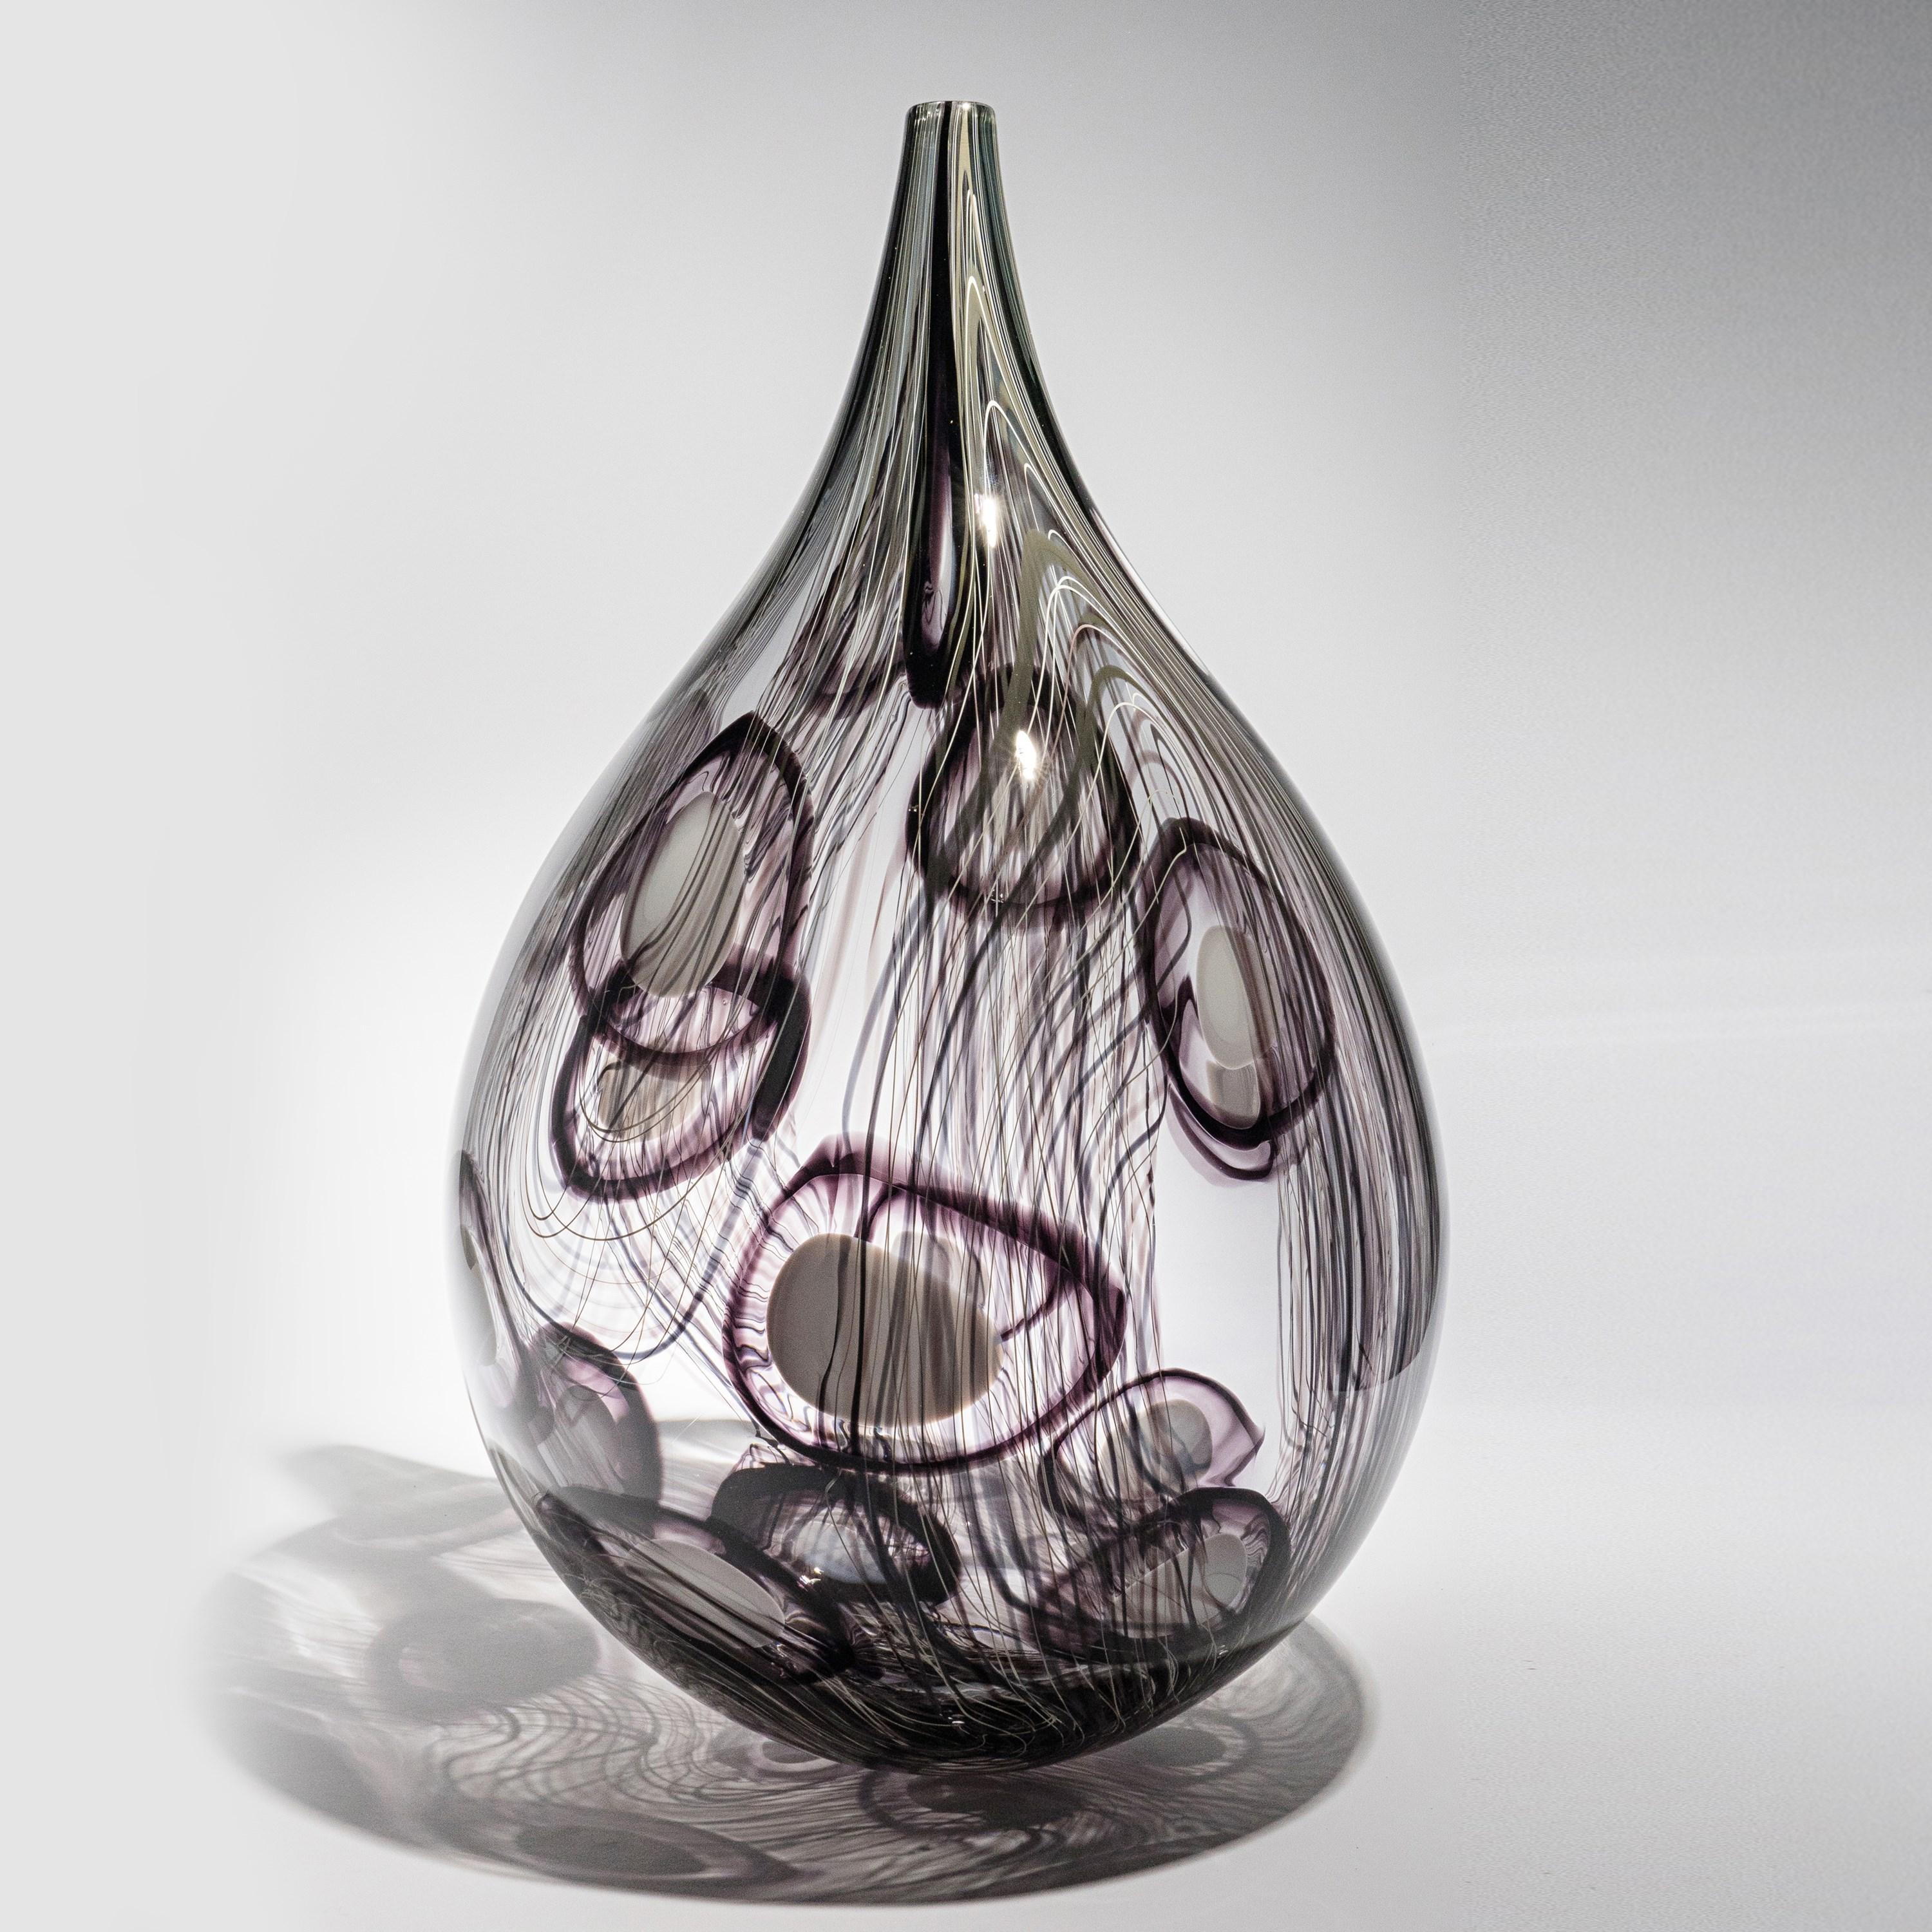 Swedish Rings iv, a Black / Aubergine & Clear Sculptural Glass Vessel by Ann Wåhlström For Sale